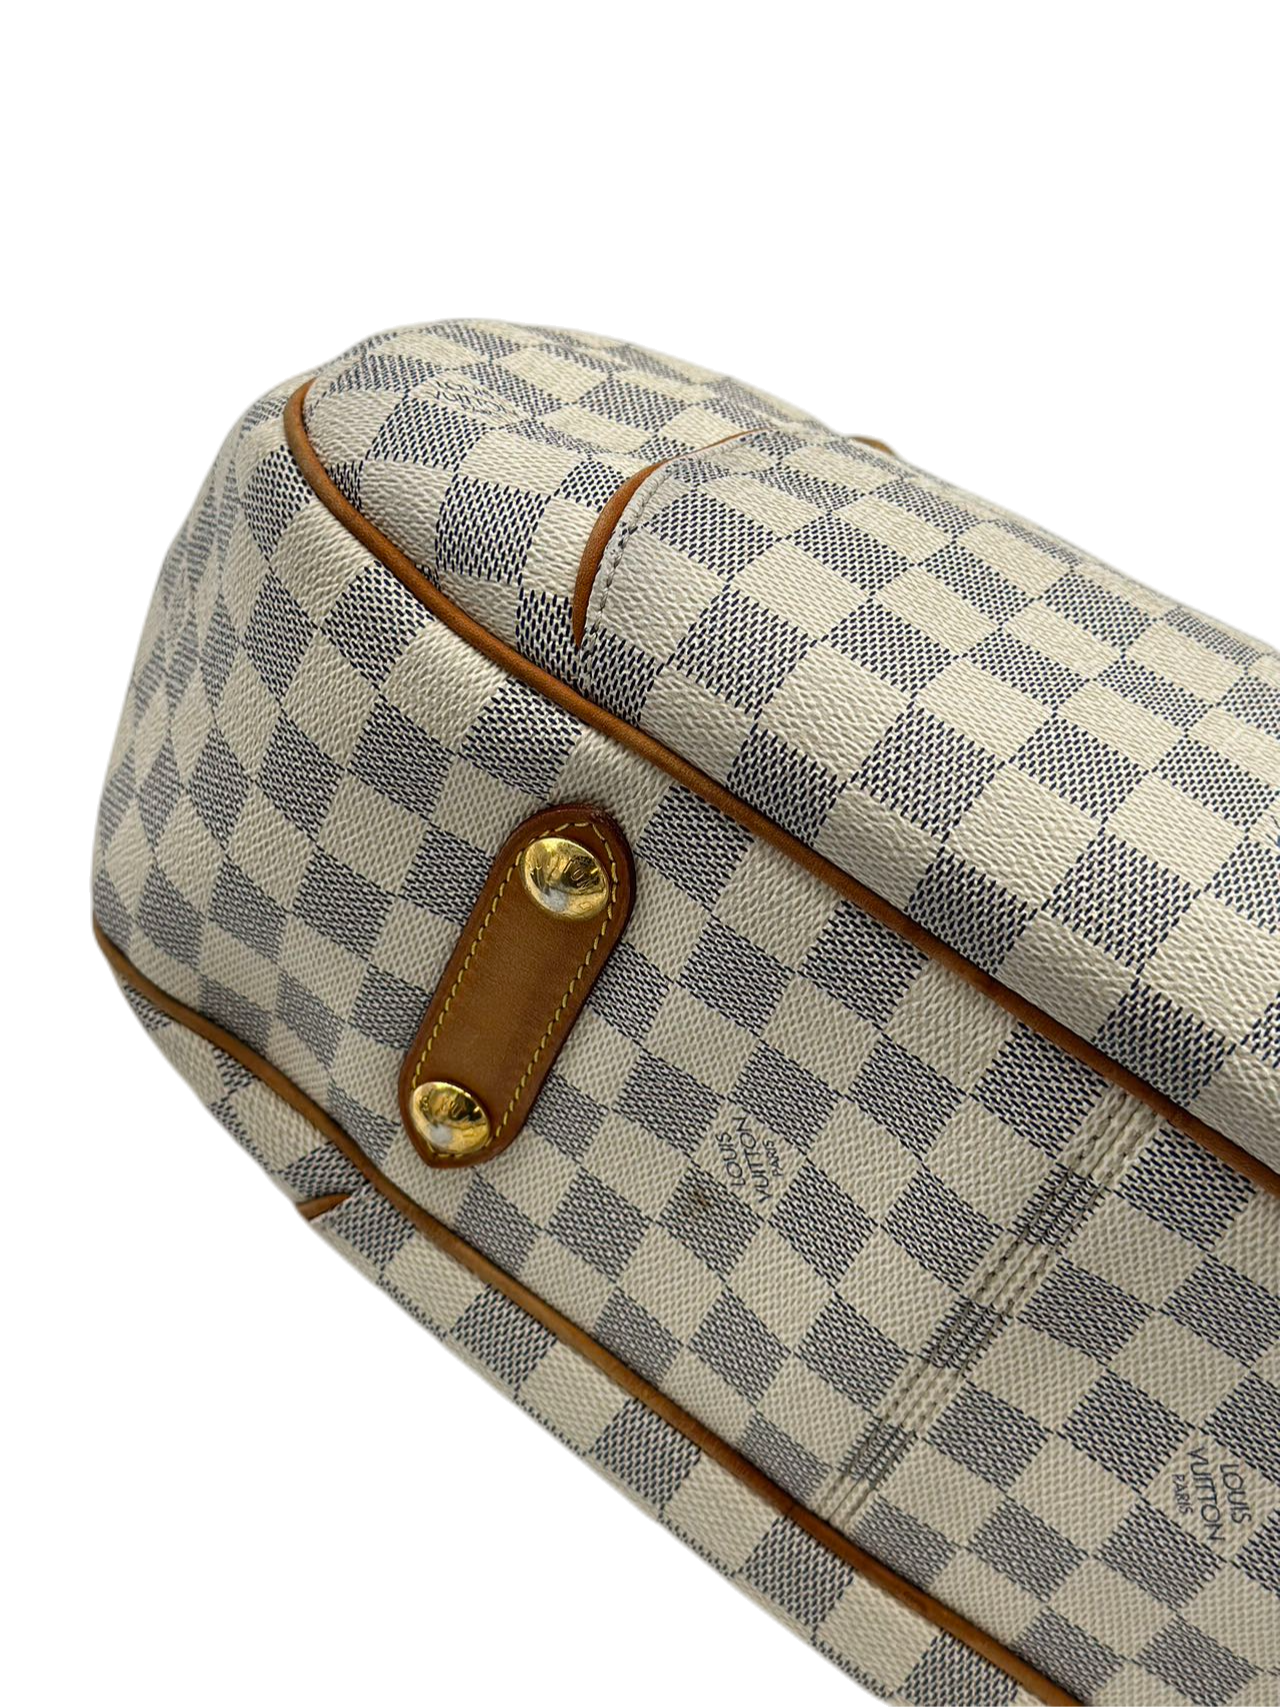 Preloved Louis Vuitton Damier Azur Galliera MM Totes Shoulder Bag